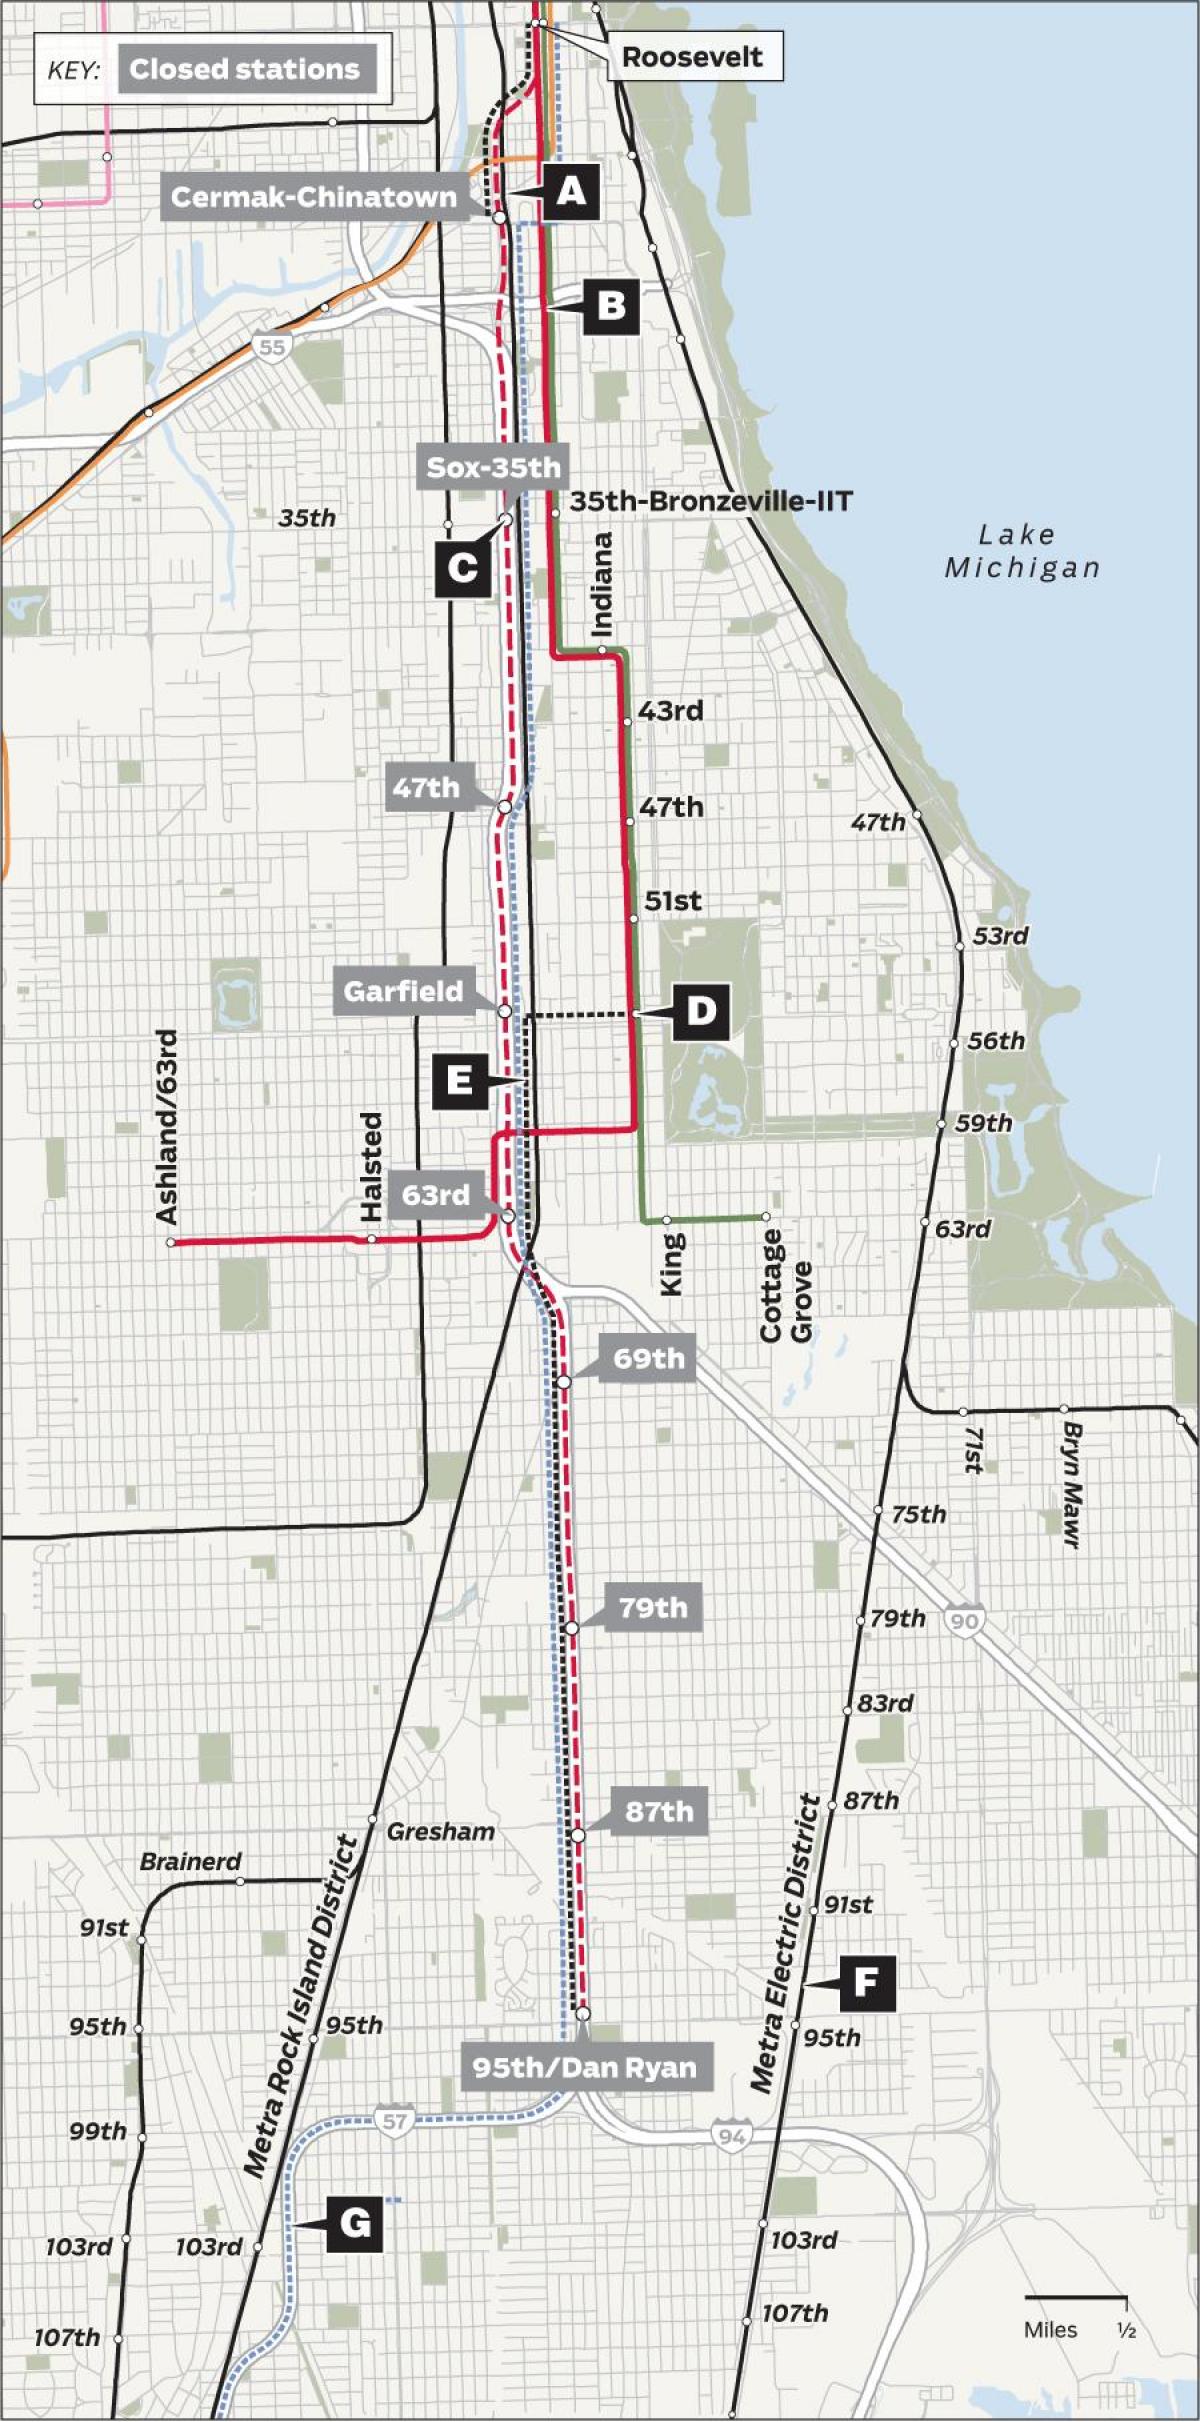 redline Chicago map